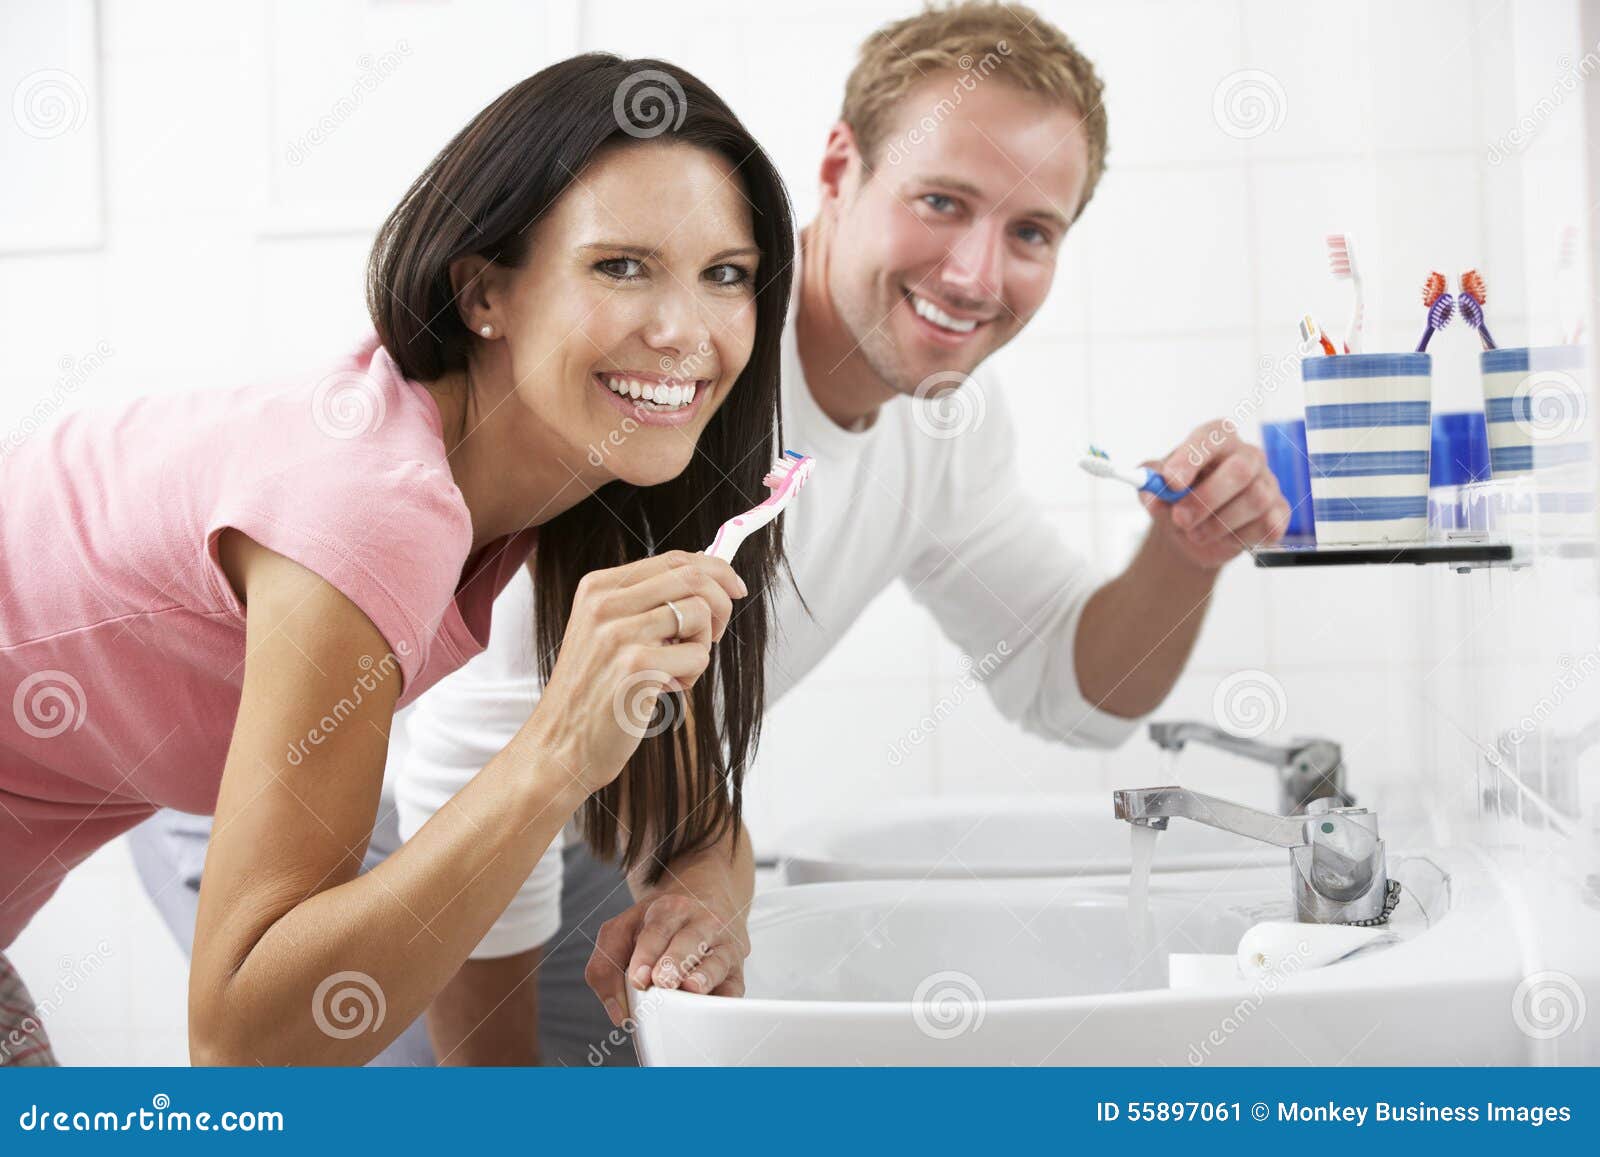 couple in bathroom brushing teeth